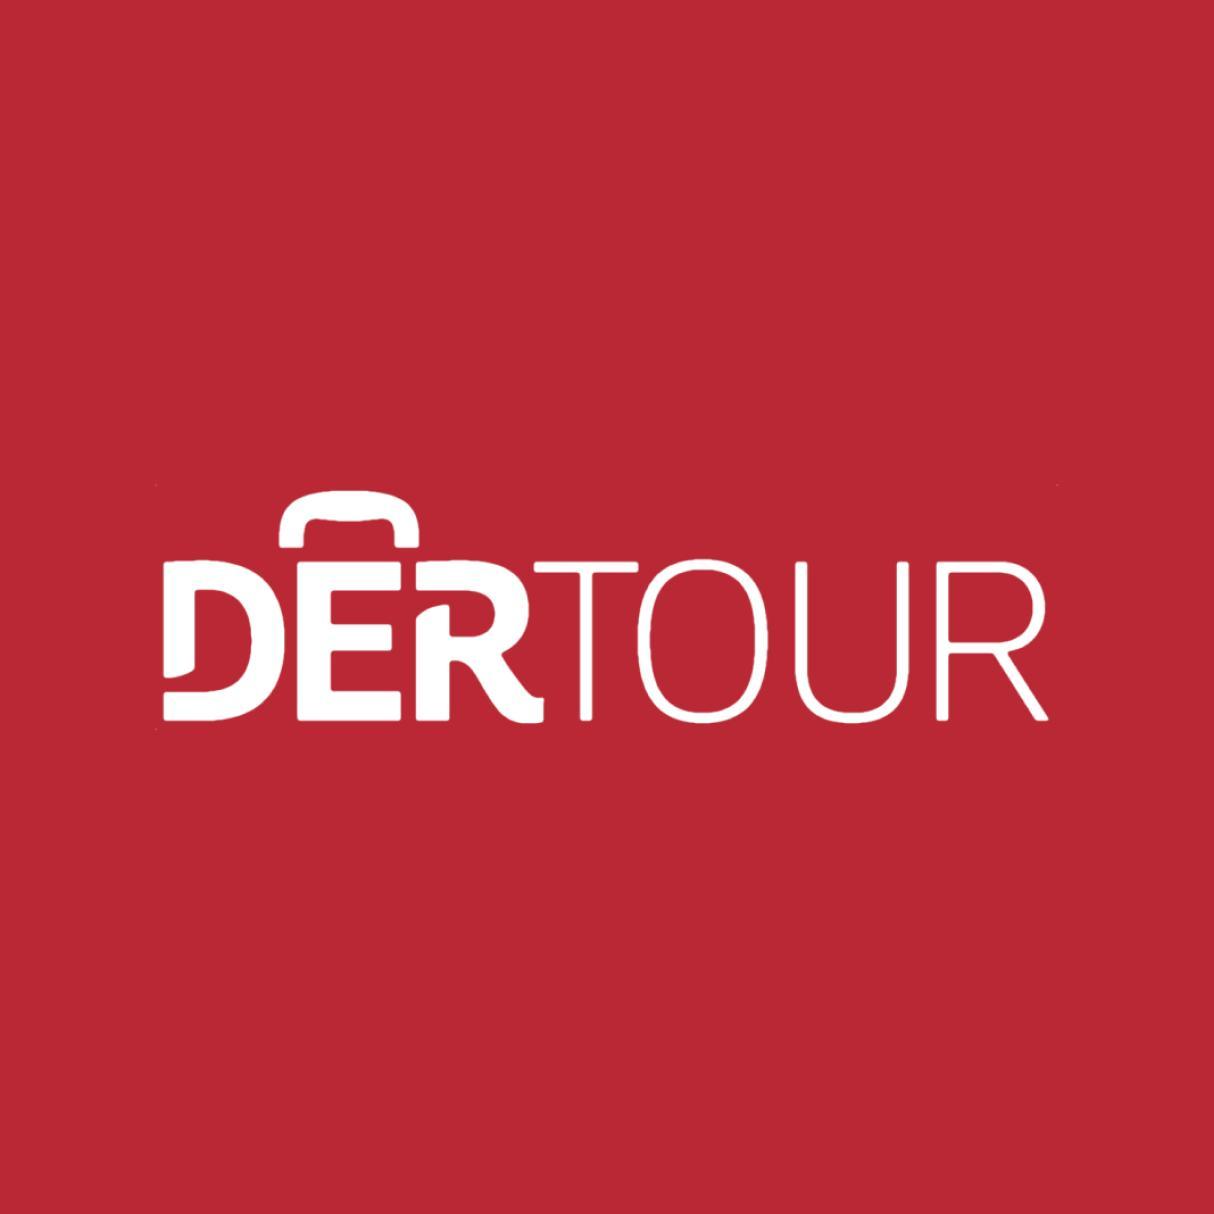 DERtour logo